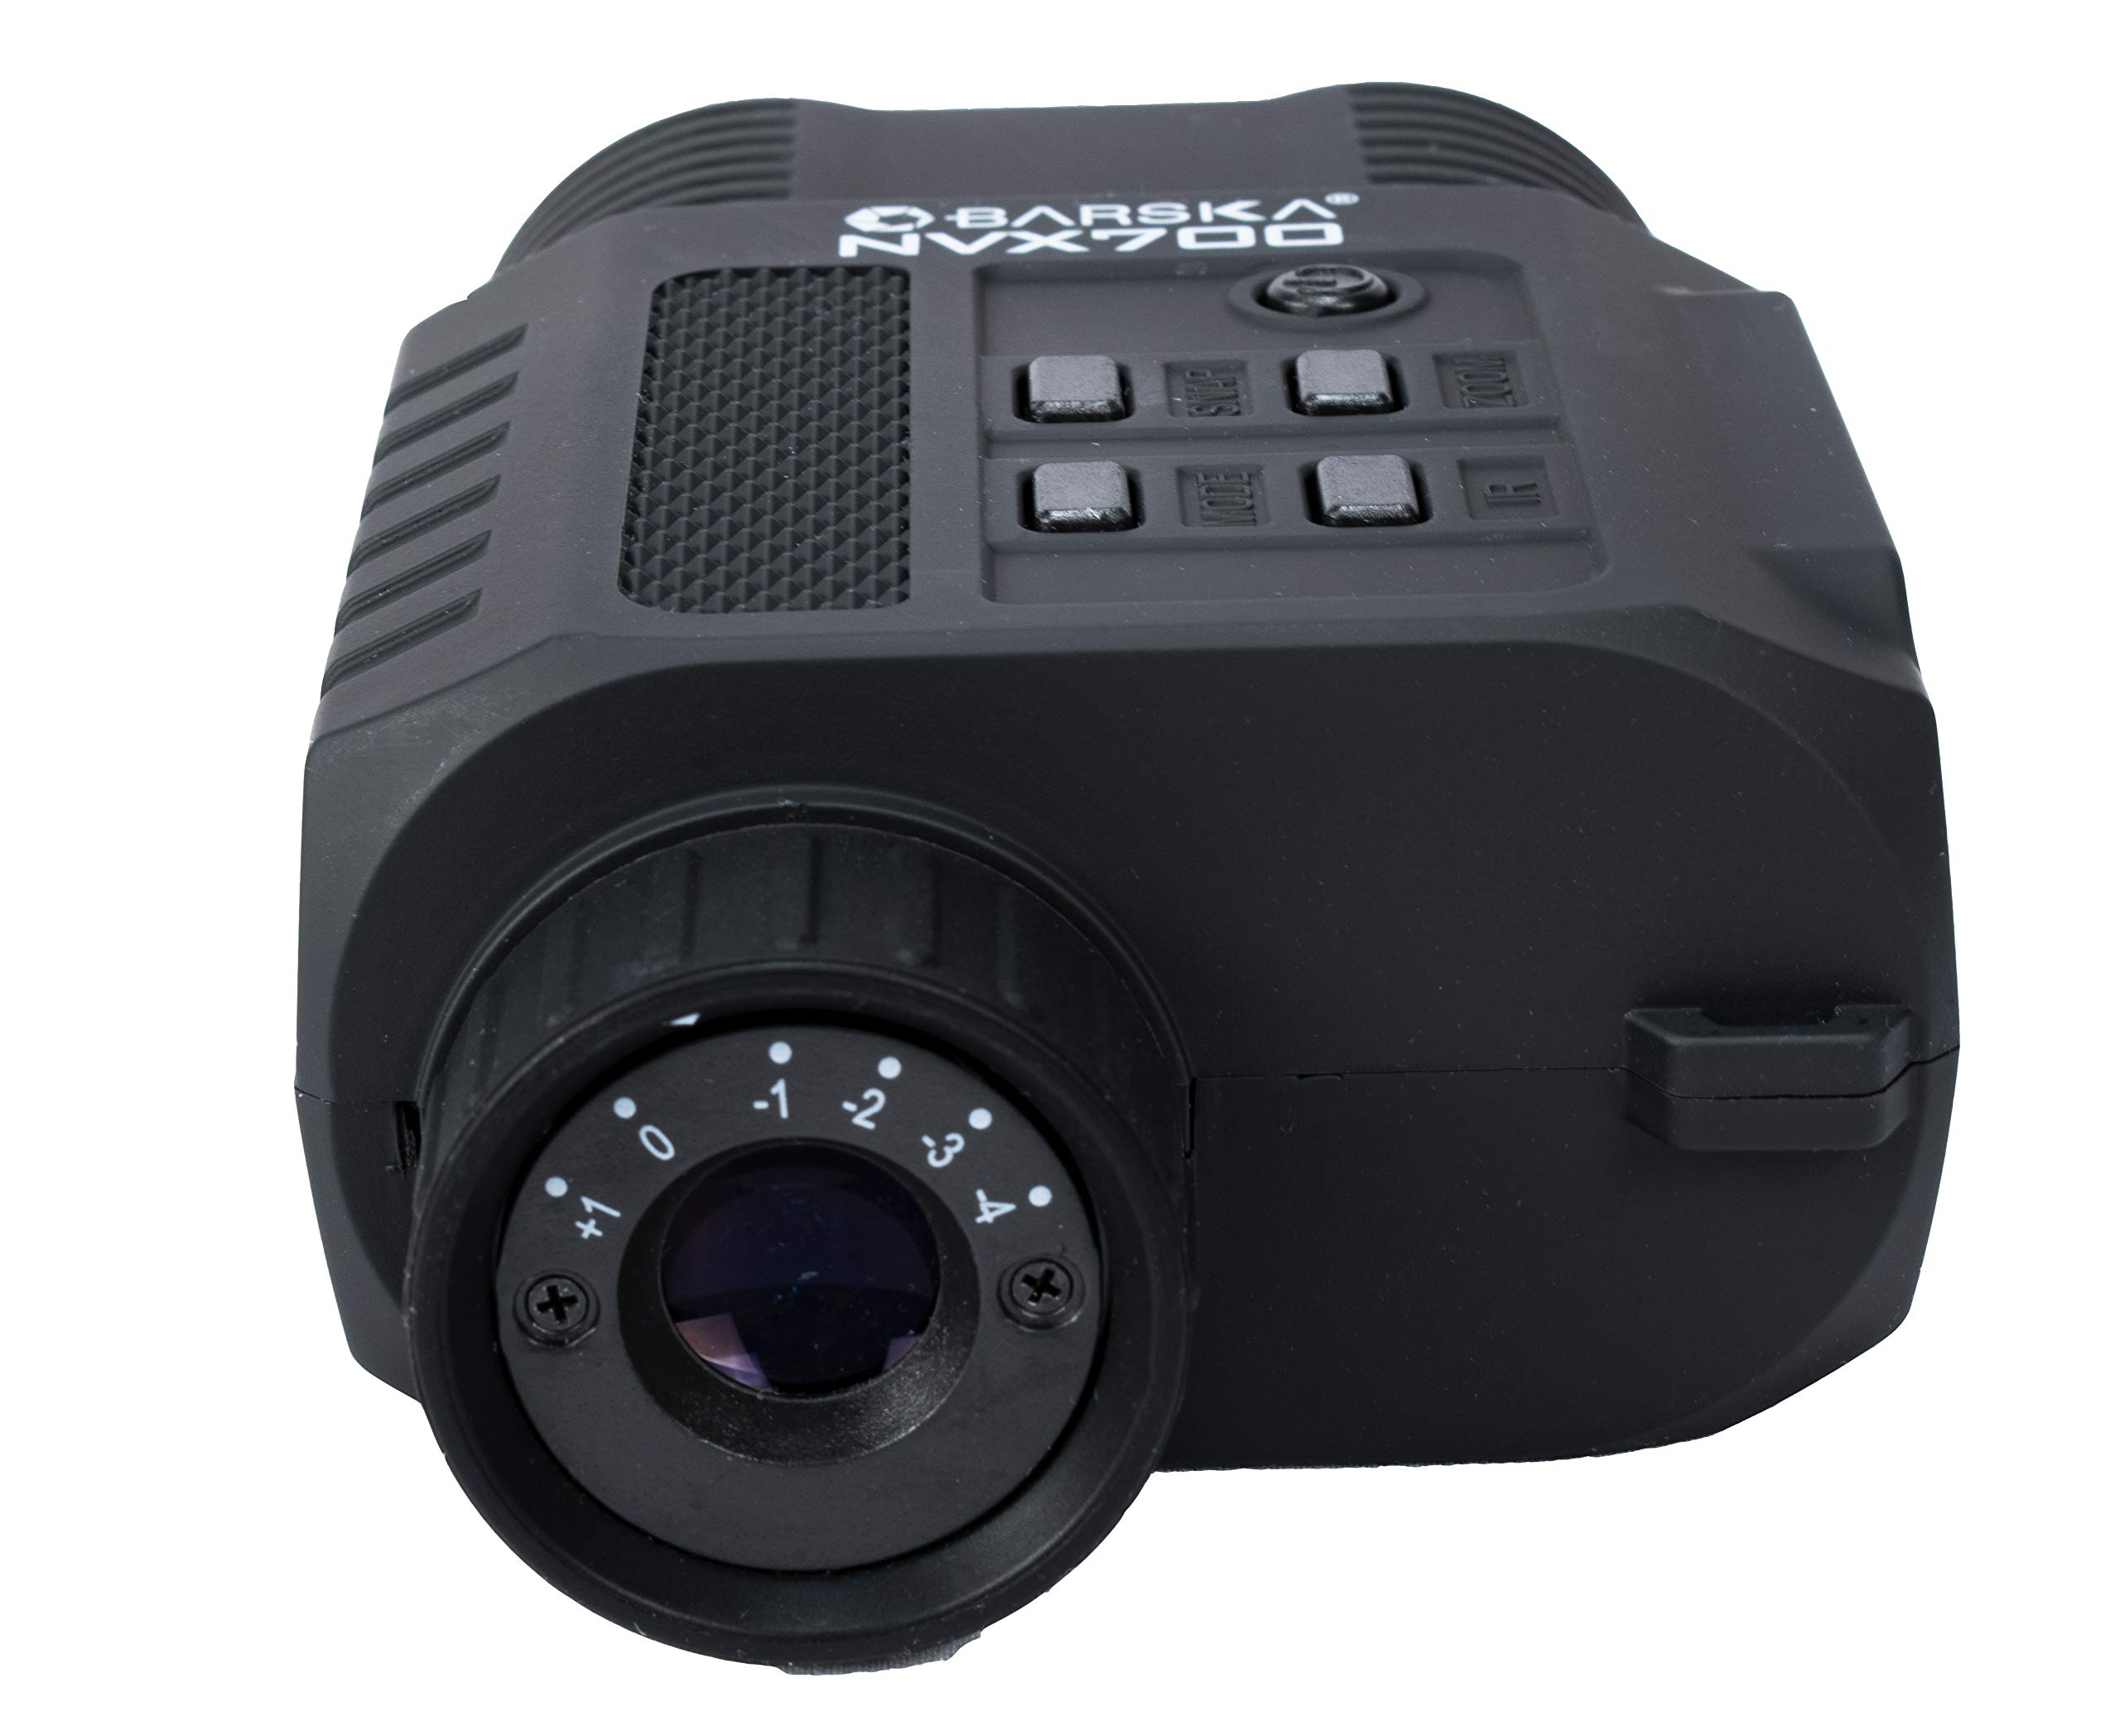 BARSKA BQ13506 Night Vision NVX700 Infrared Illuminator Digital Monocular, Black, One Size